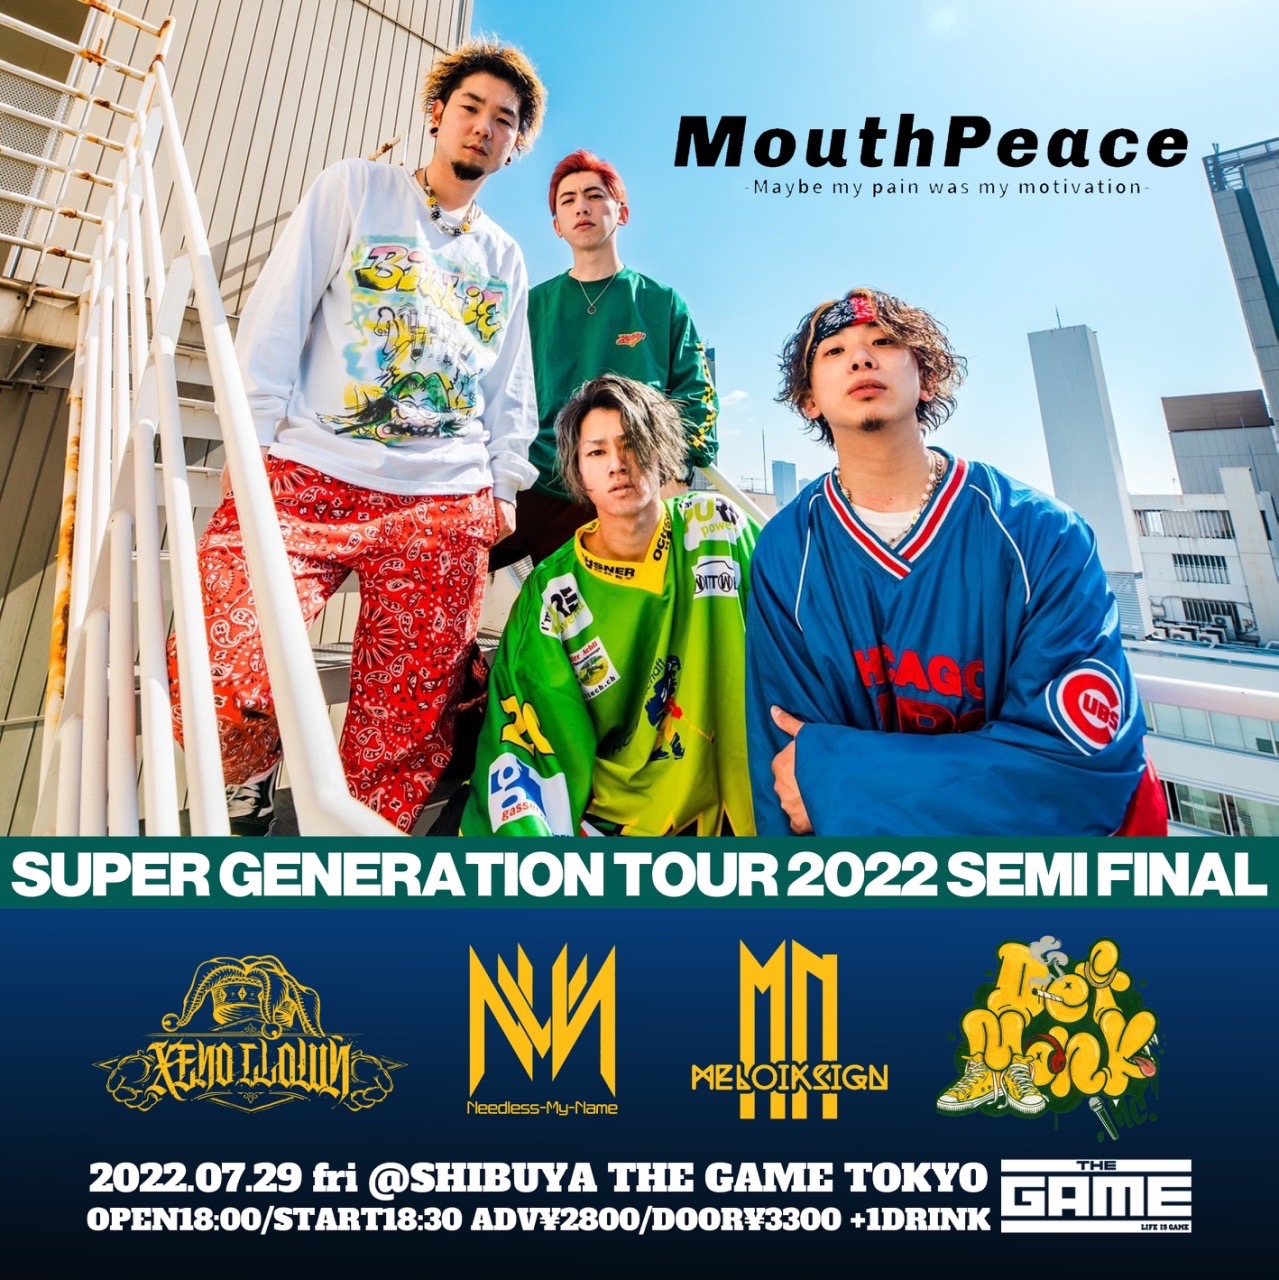 MouthPeace SUPER GENERATION TOUR 2022 SEMI FINAL / XENO CLOWN 2nd Single 『Memories』Release Tour vol.1